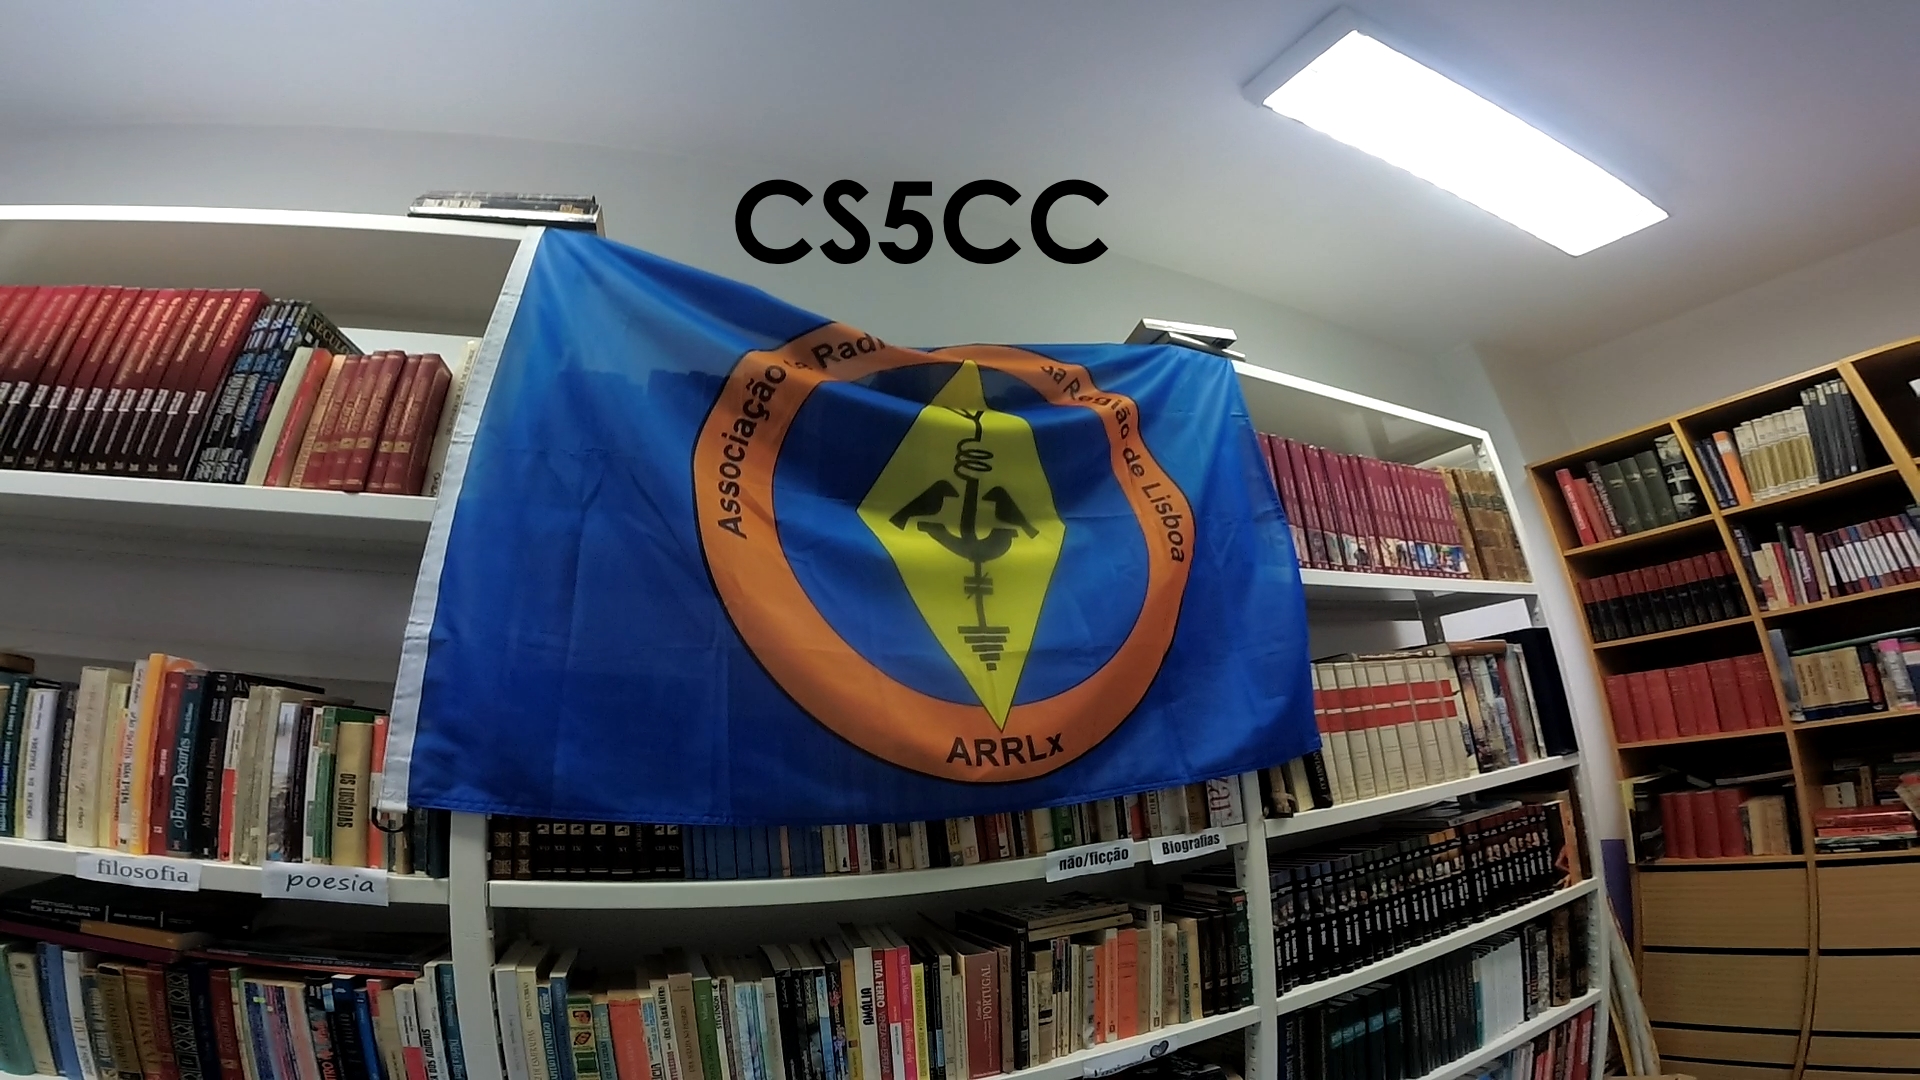 FLAG of ARRLx at the CS5CC station